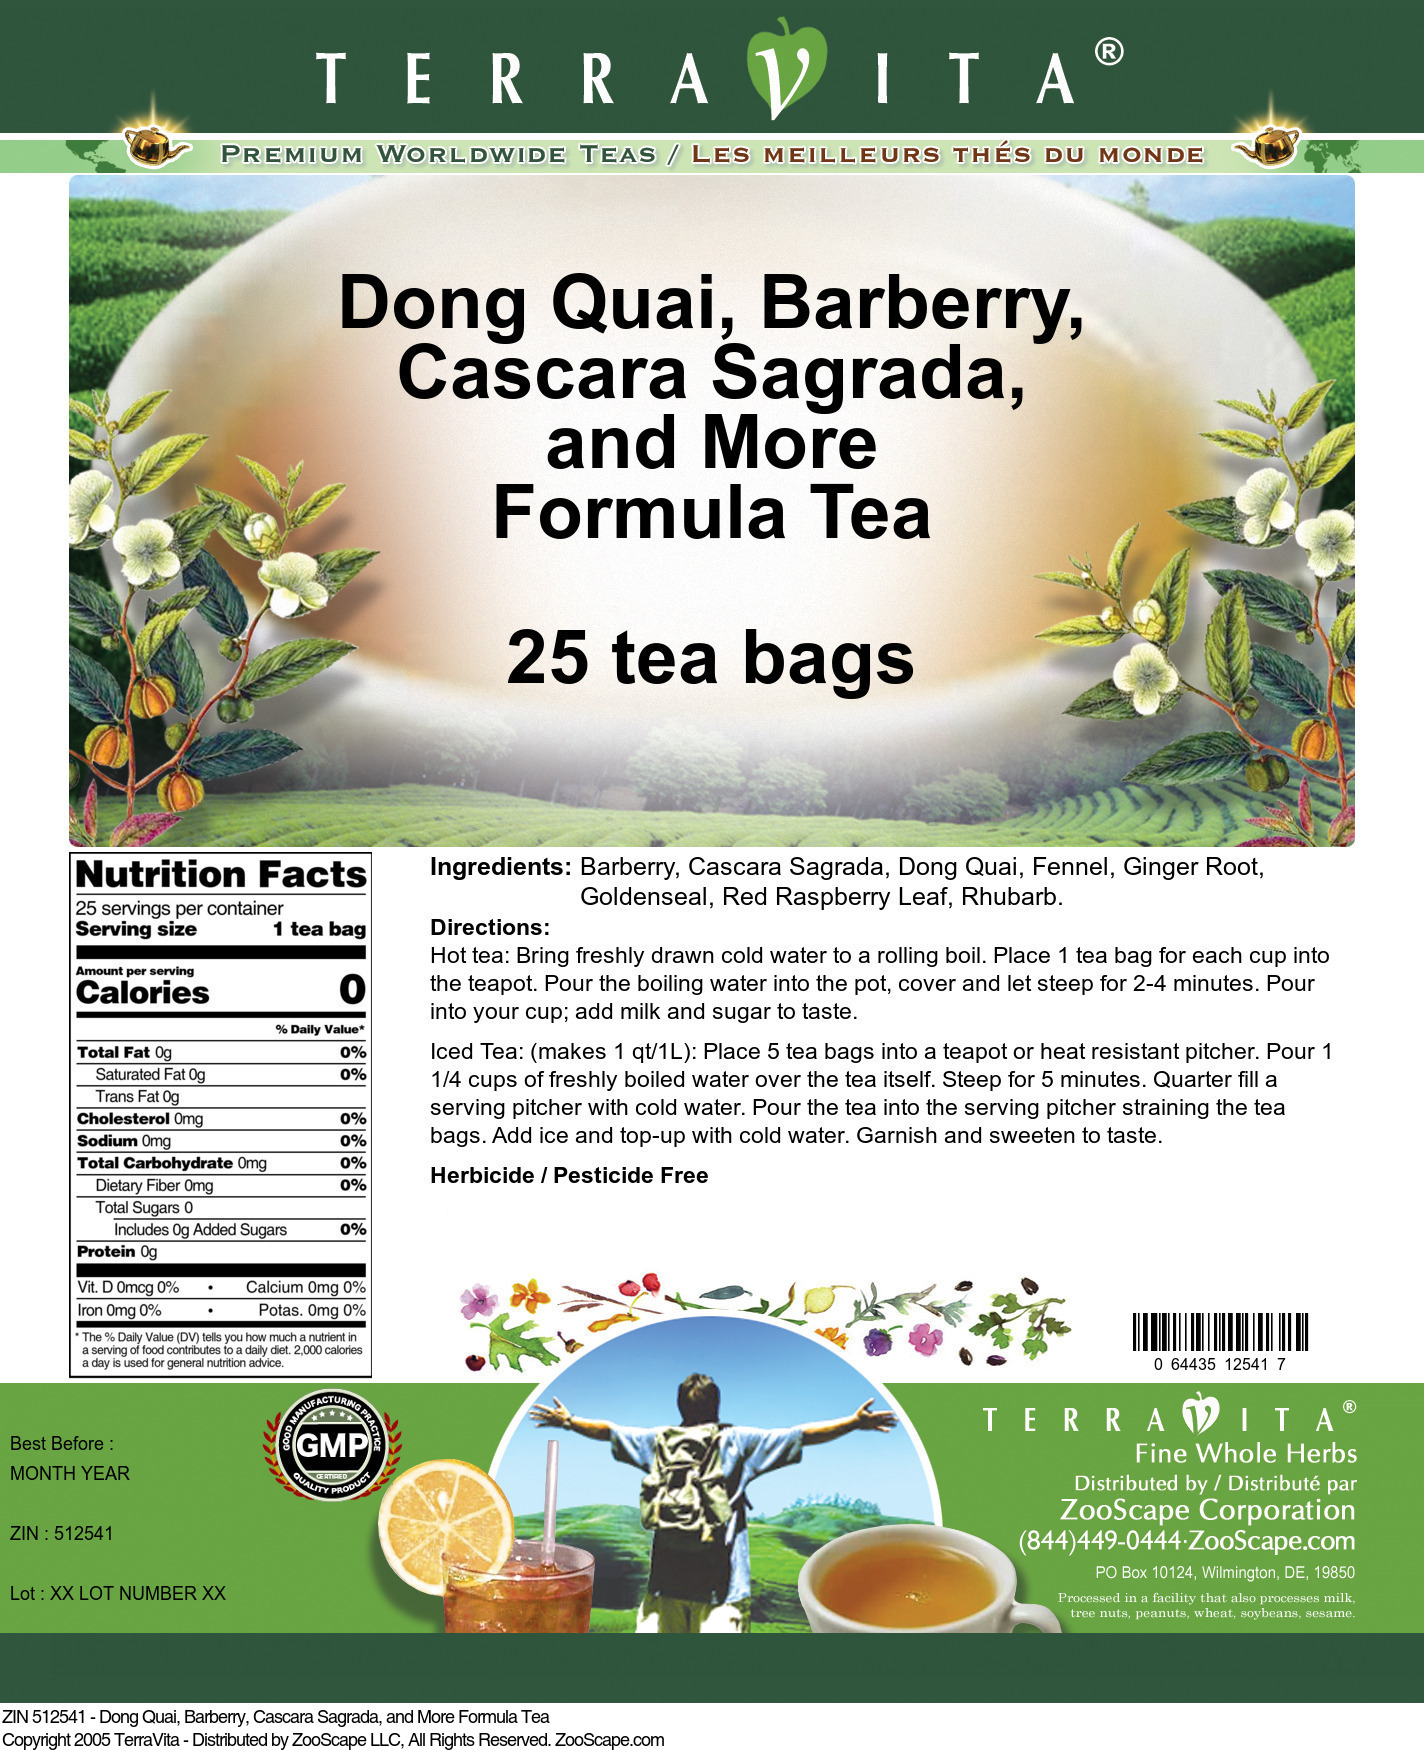 Dong Quai, Barberry, Cascara Sagrada, and More Formula Tea - Label